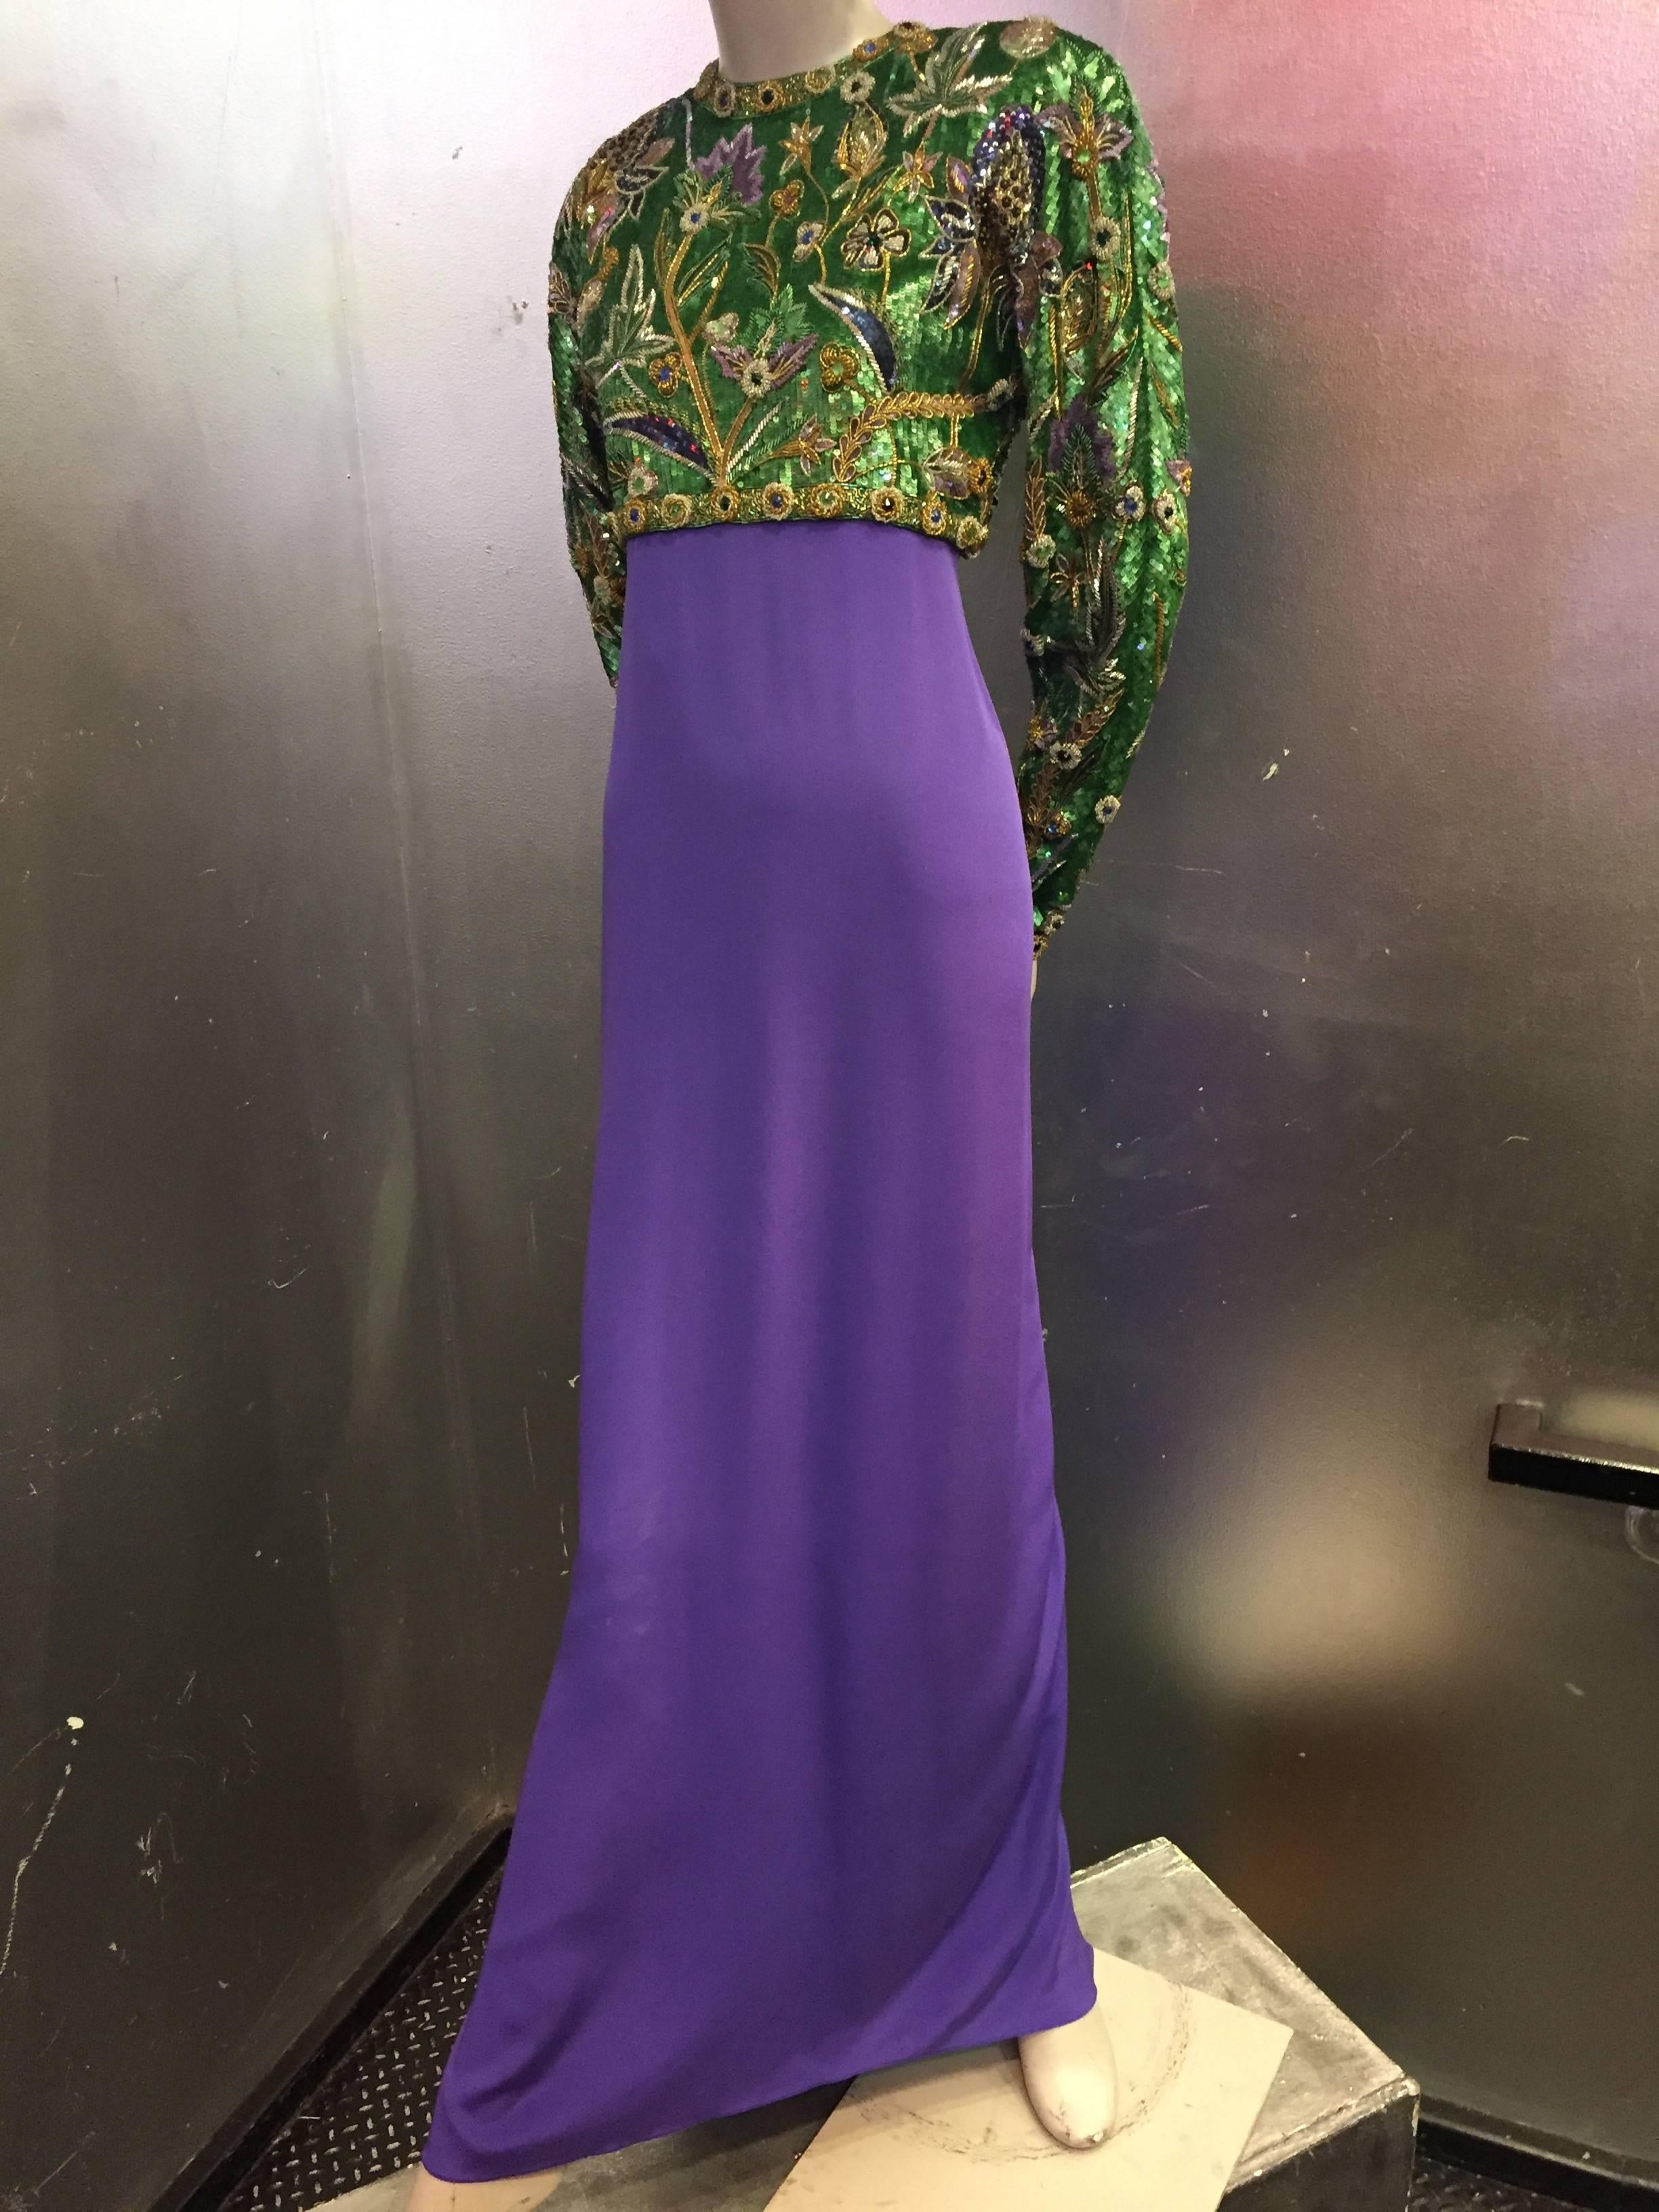 1980s Oscar de La Renta beaded floral motif attached bolero bodice with purple silk crepe column gown with low-cut gathered train peekaboo back. Closure at center back. 